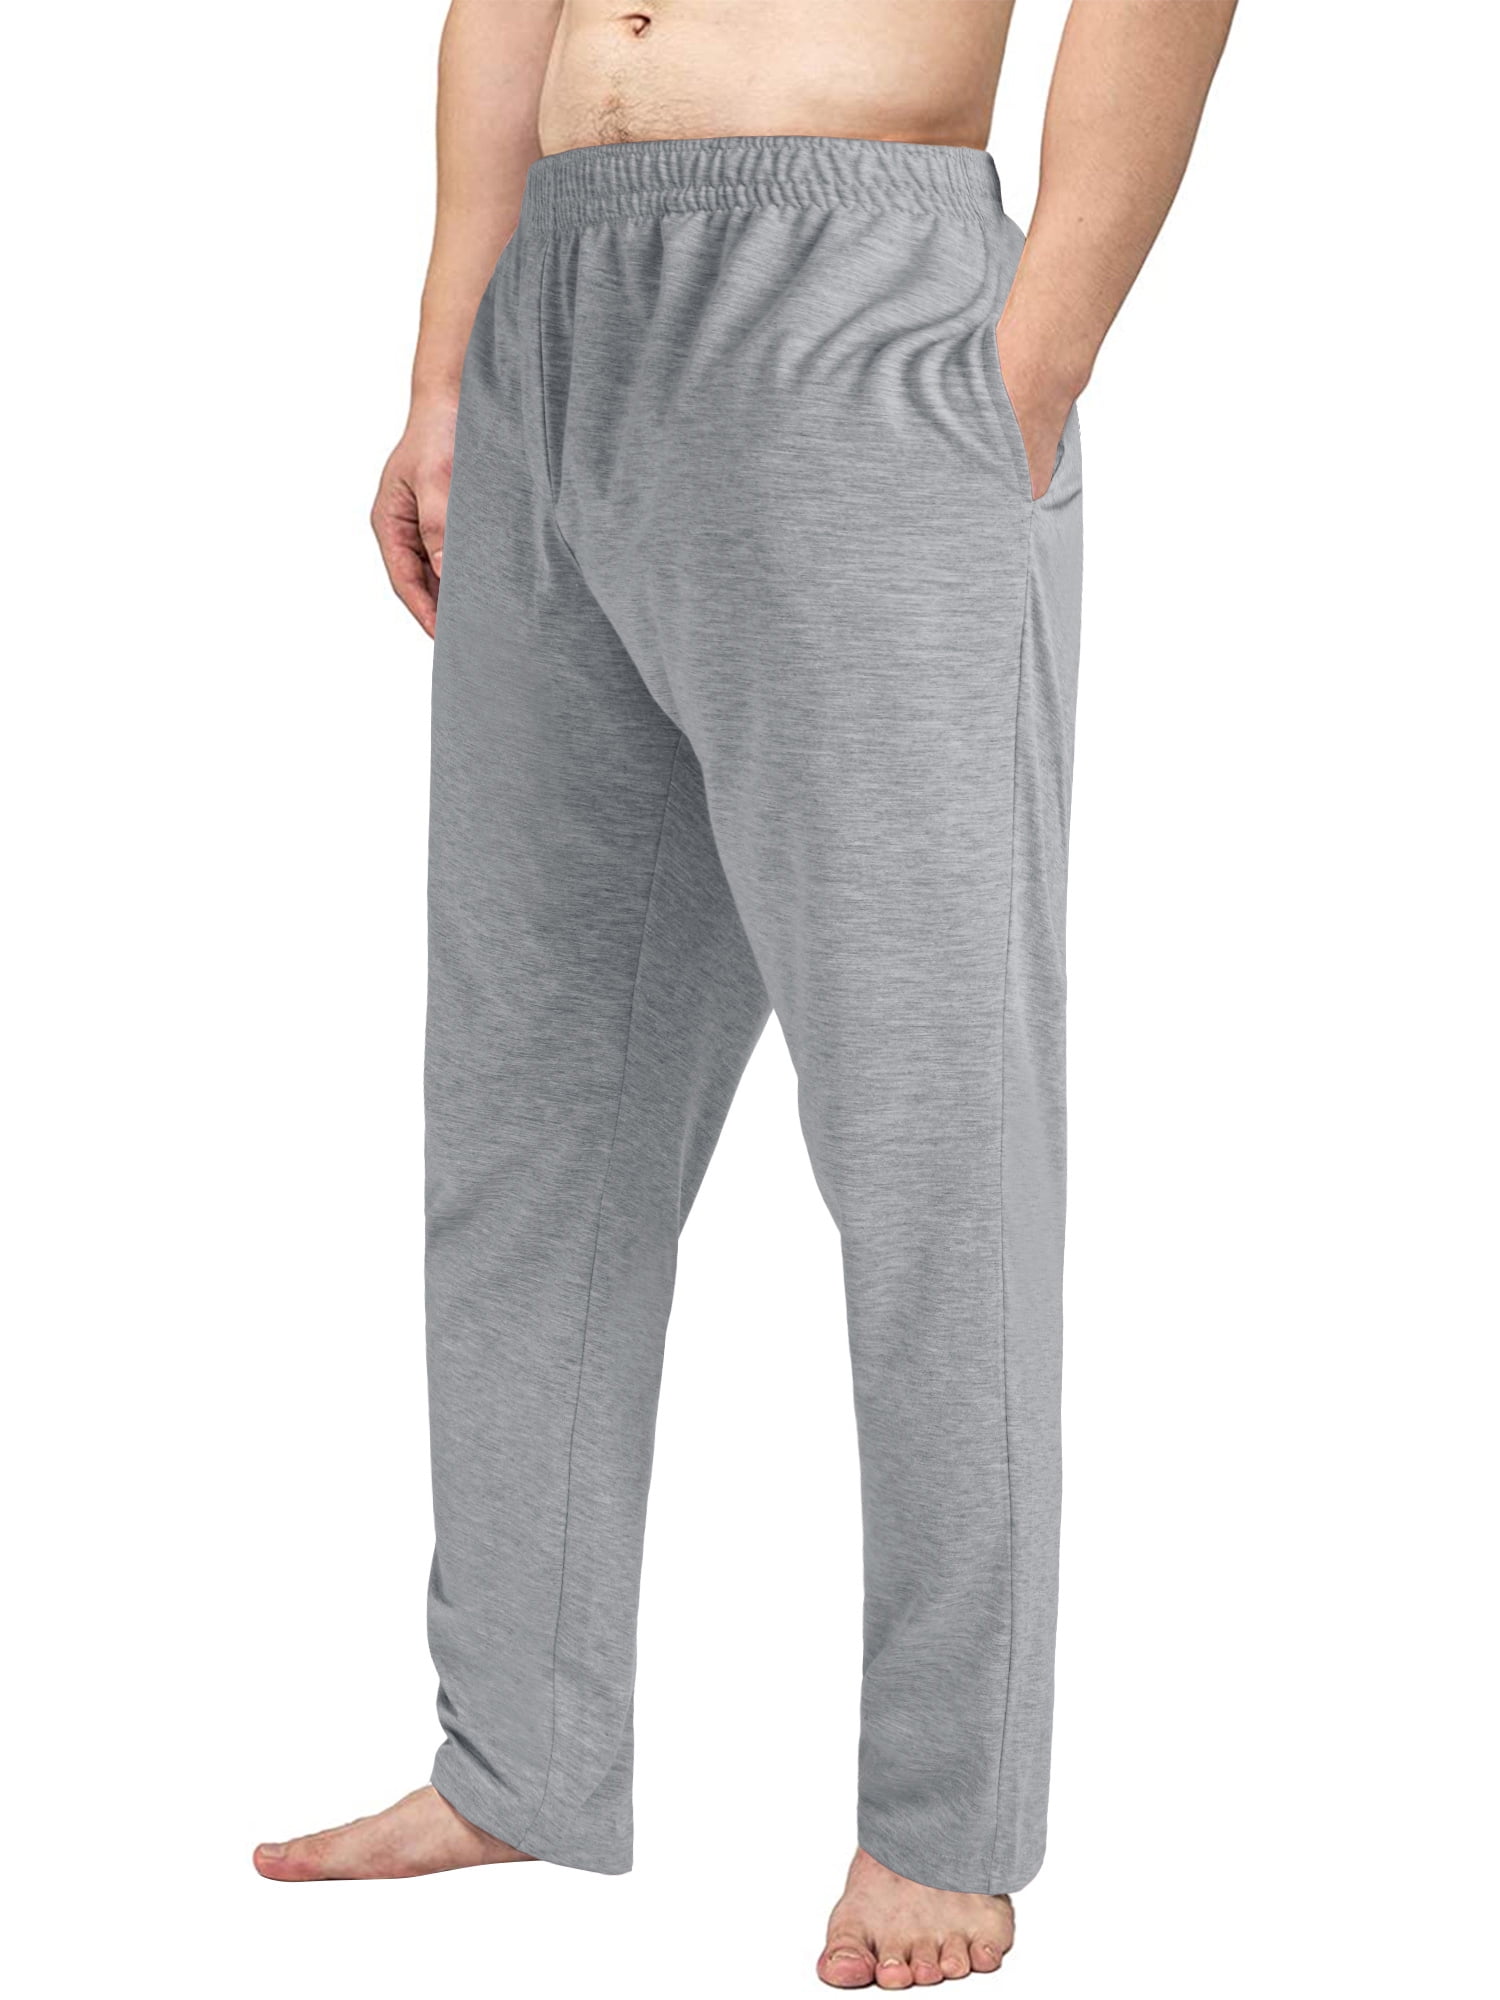 LELINTA Men's Knit Pajama Pants Bamboo Cotton Lounge Sleep Bottoms Soft ...